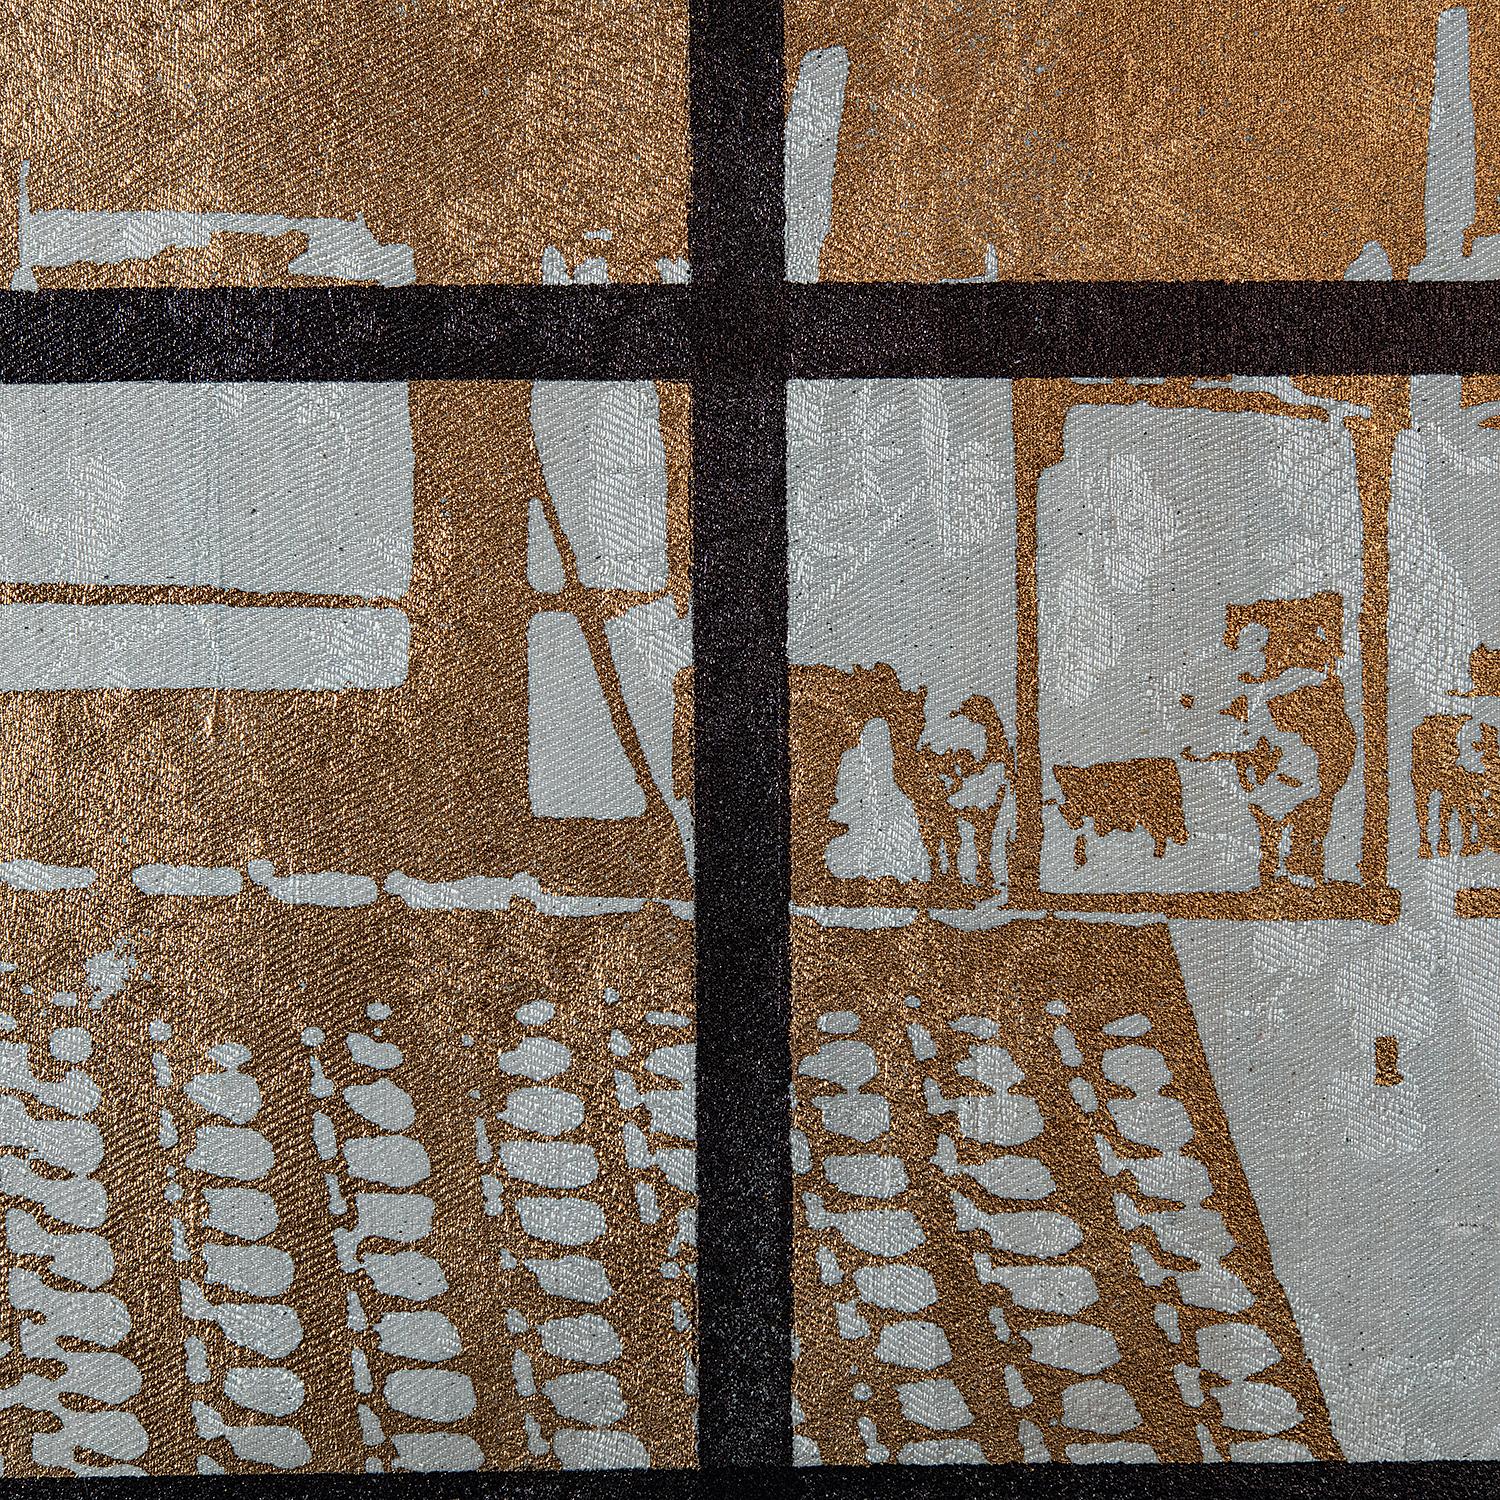 Yoshikawa, Noto, Contemporary Silk Screen Print of Cityscape, Textile Sculpture - Silver Landscape Print by Glen Kaufman